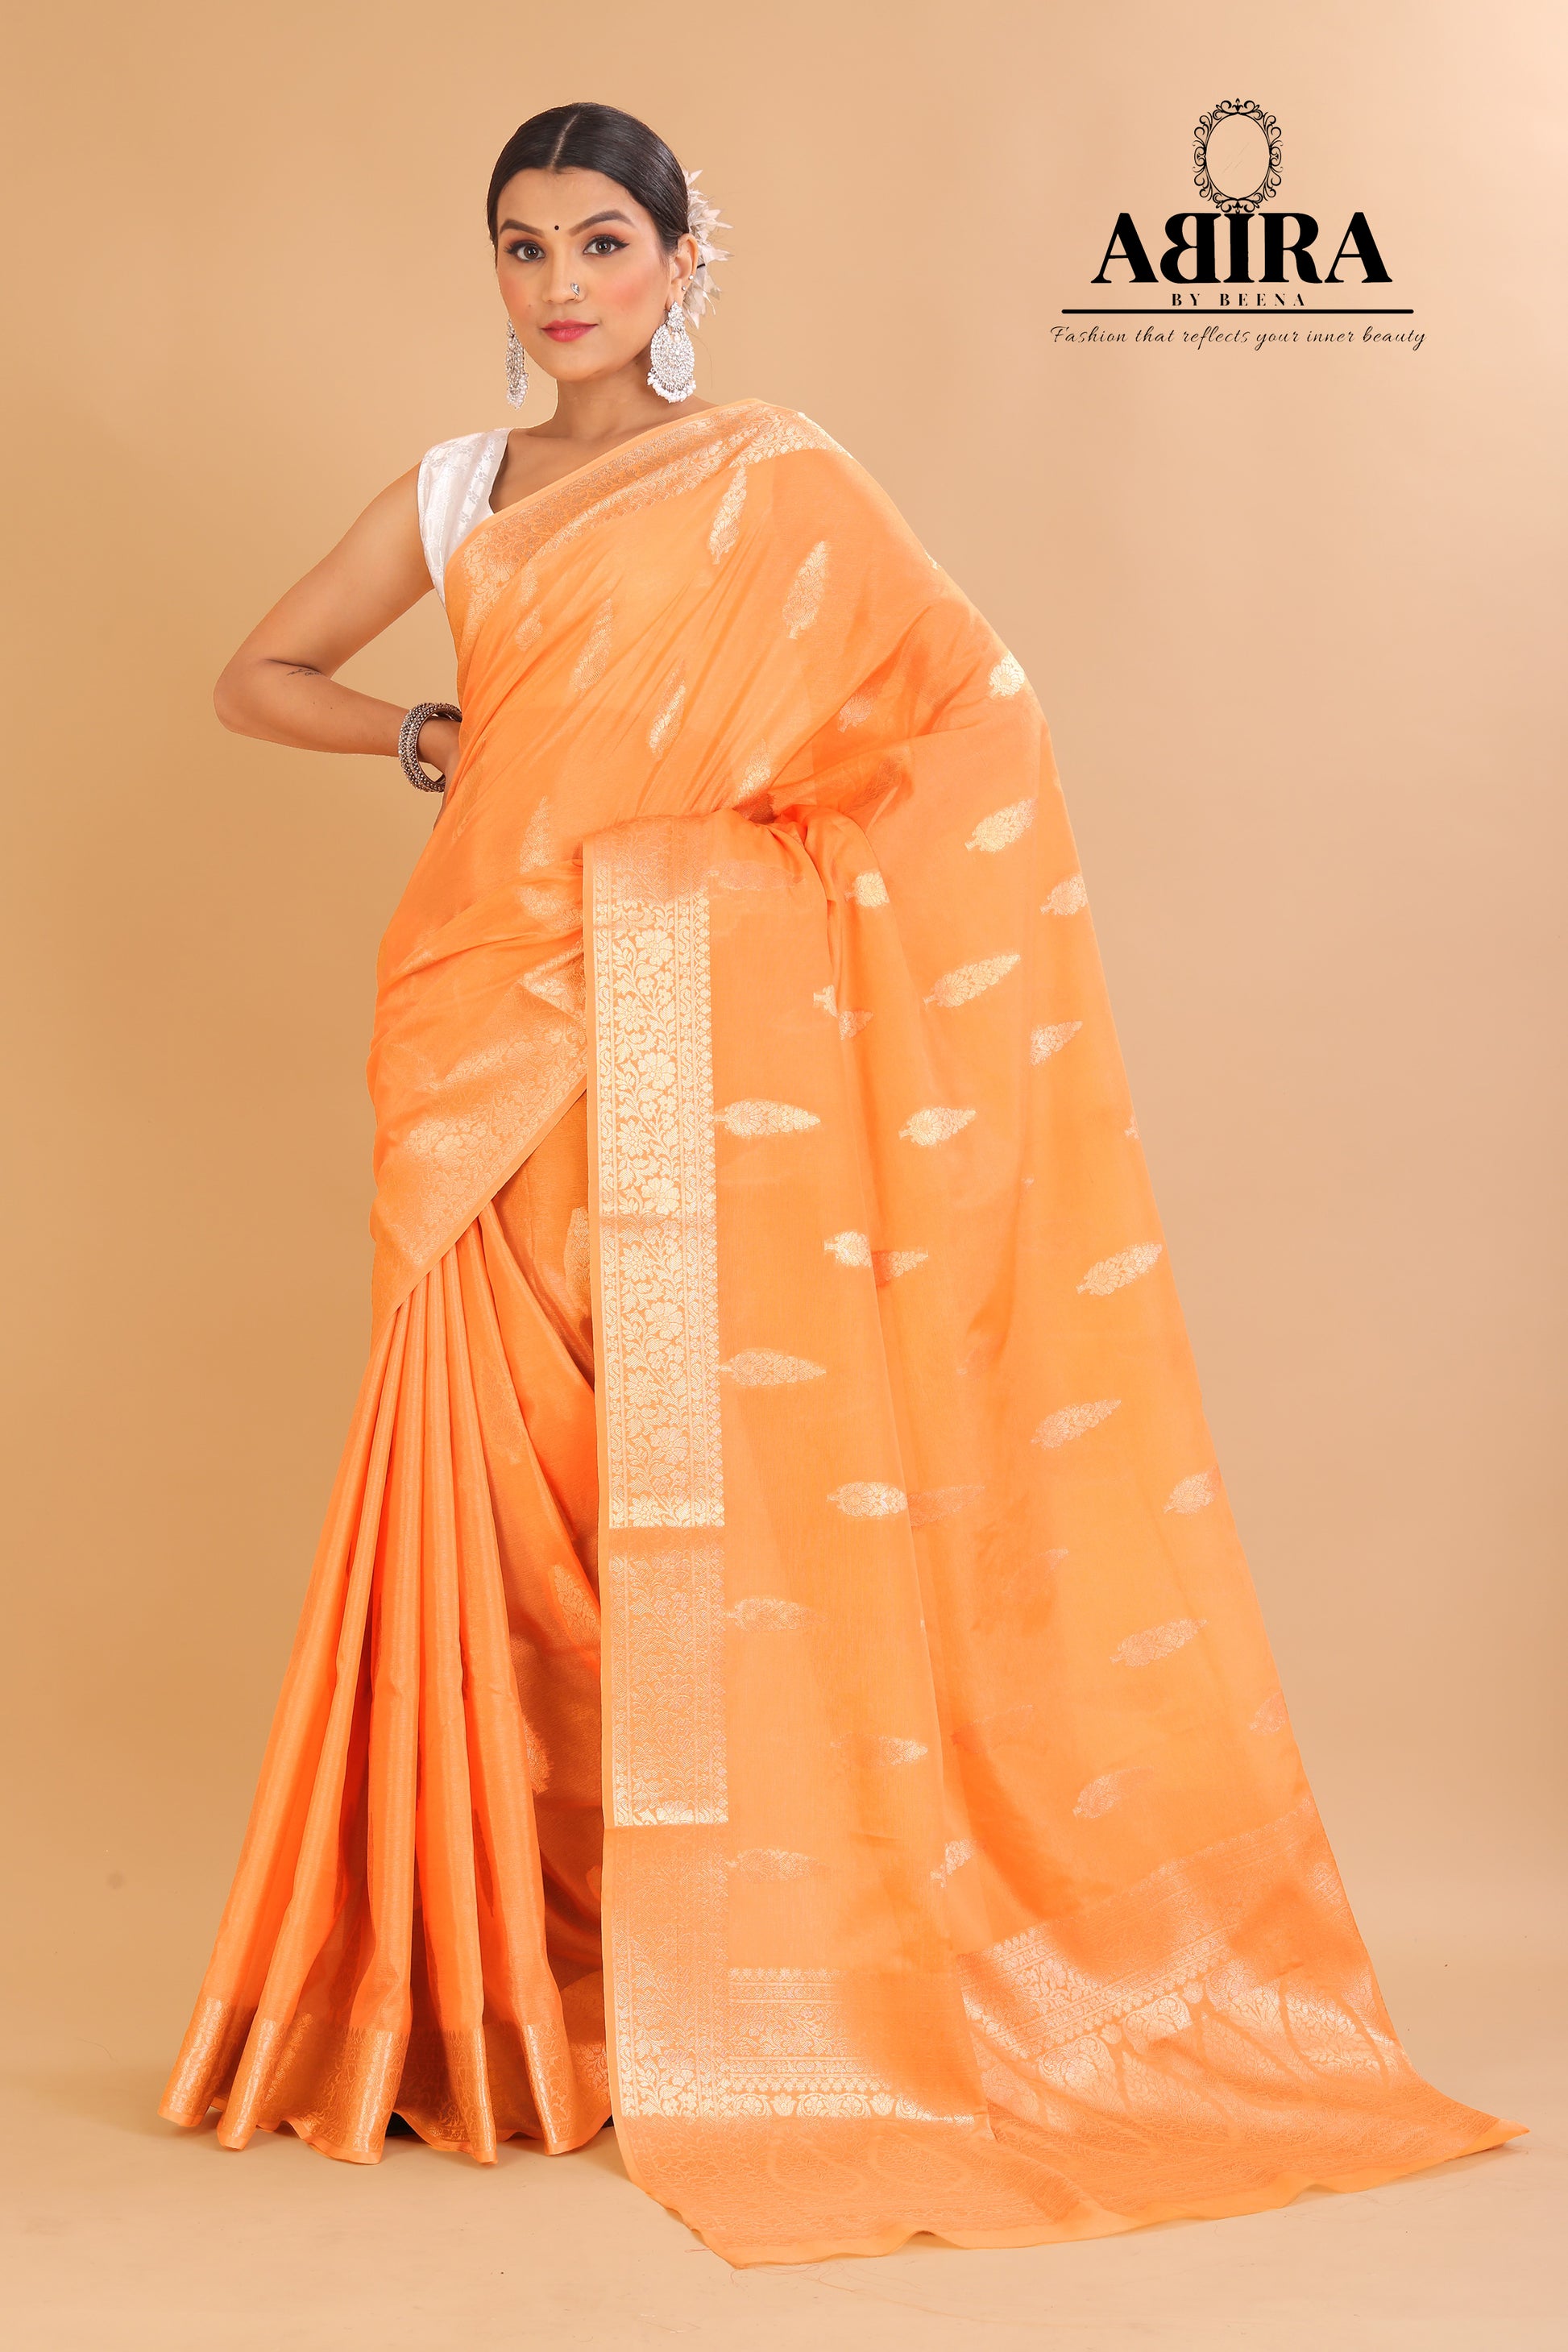 Orange Banaras warm silk - AbirabyBeena